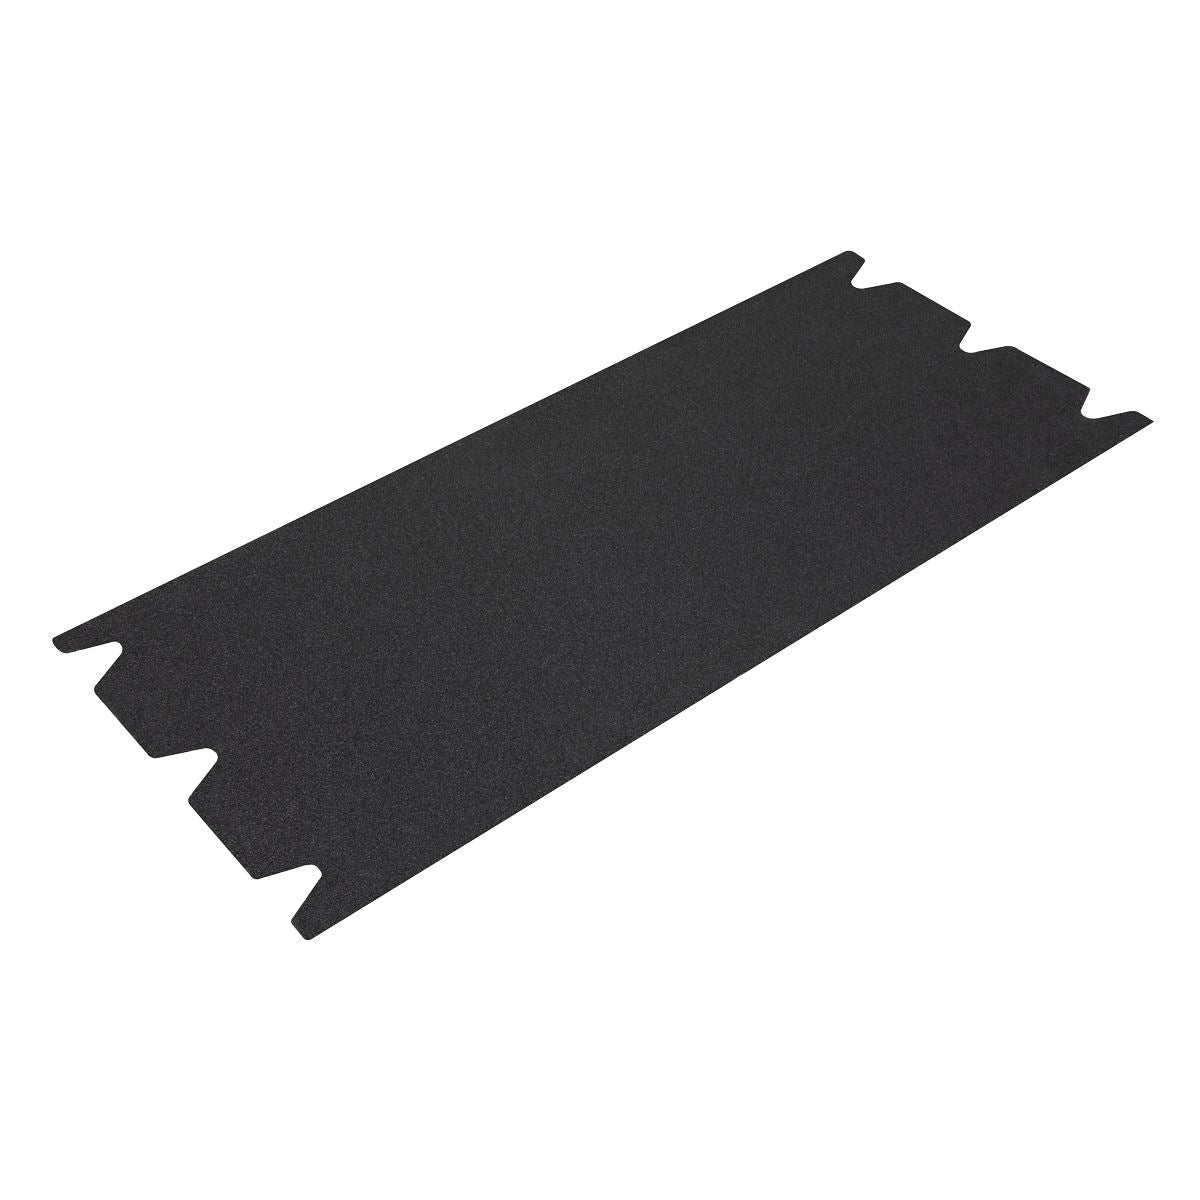 Sealey Floor Sanding Sheet 203 x 495mm 120Grit - Pack of 25